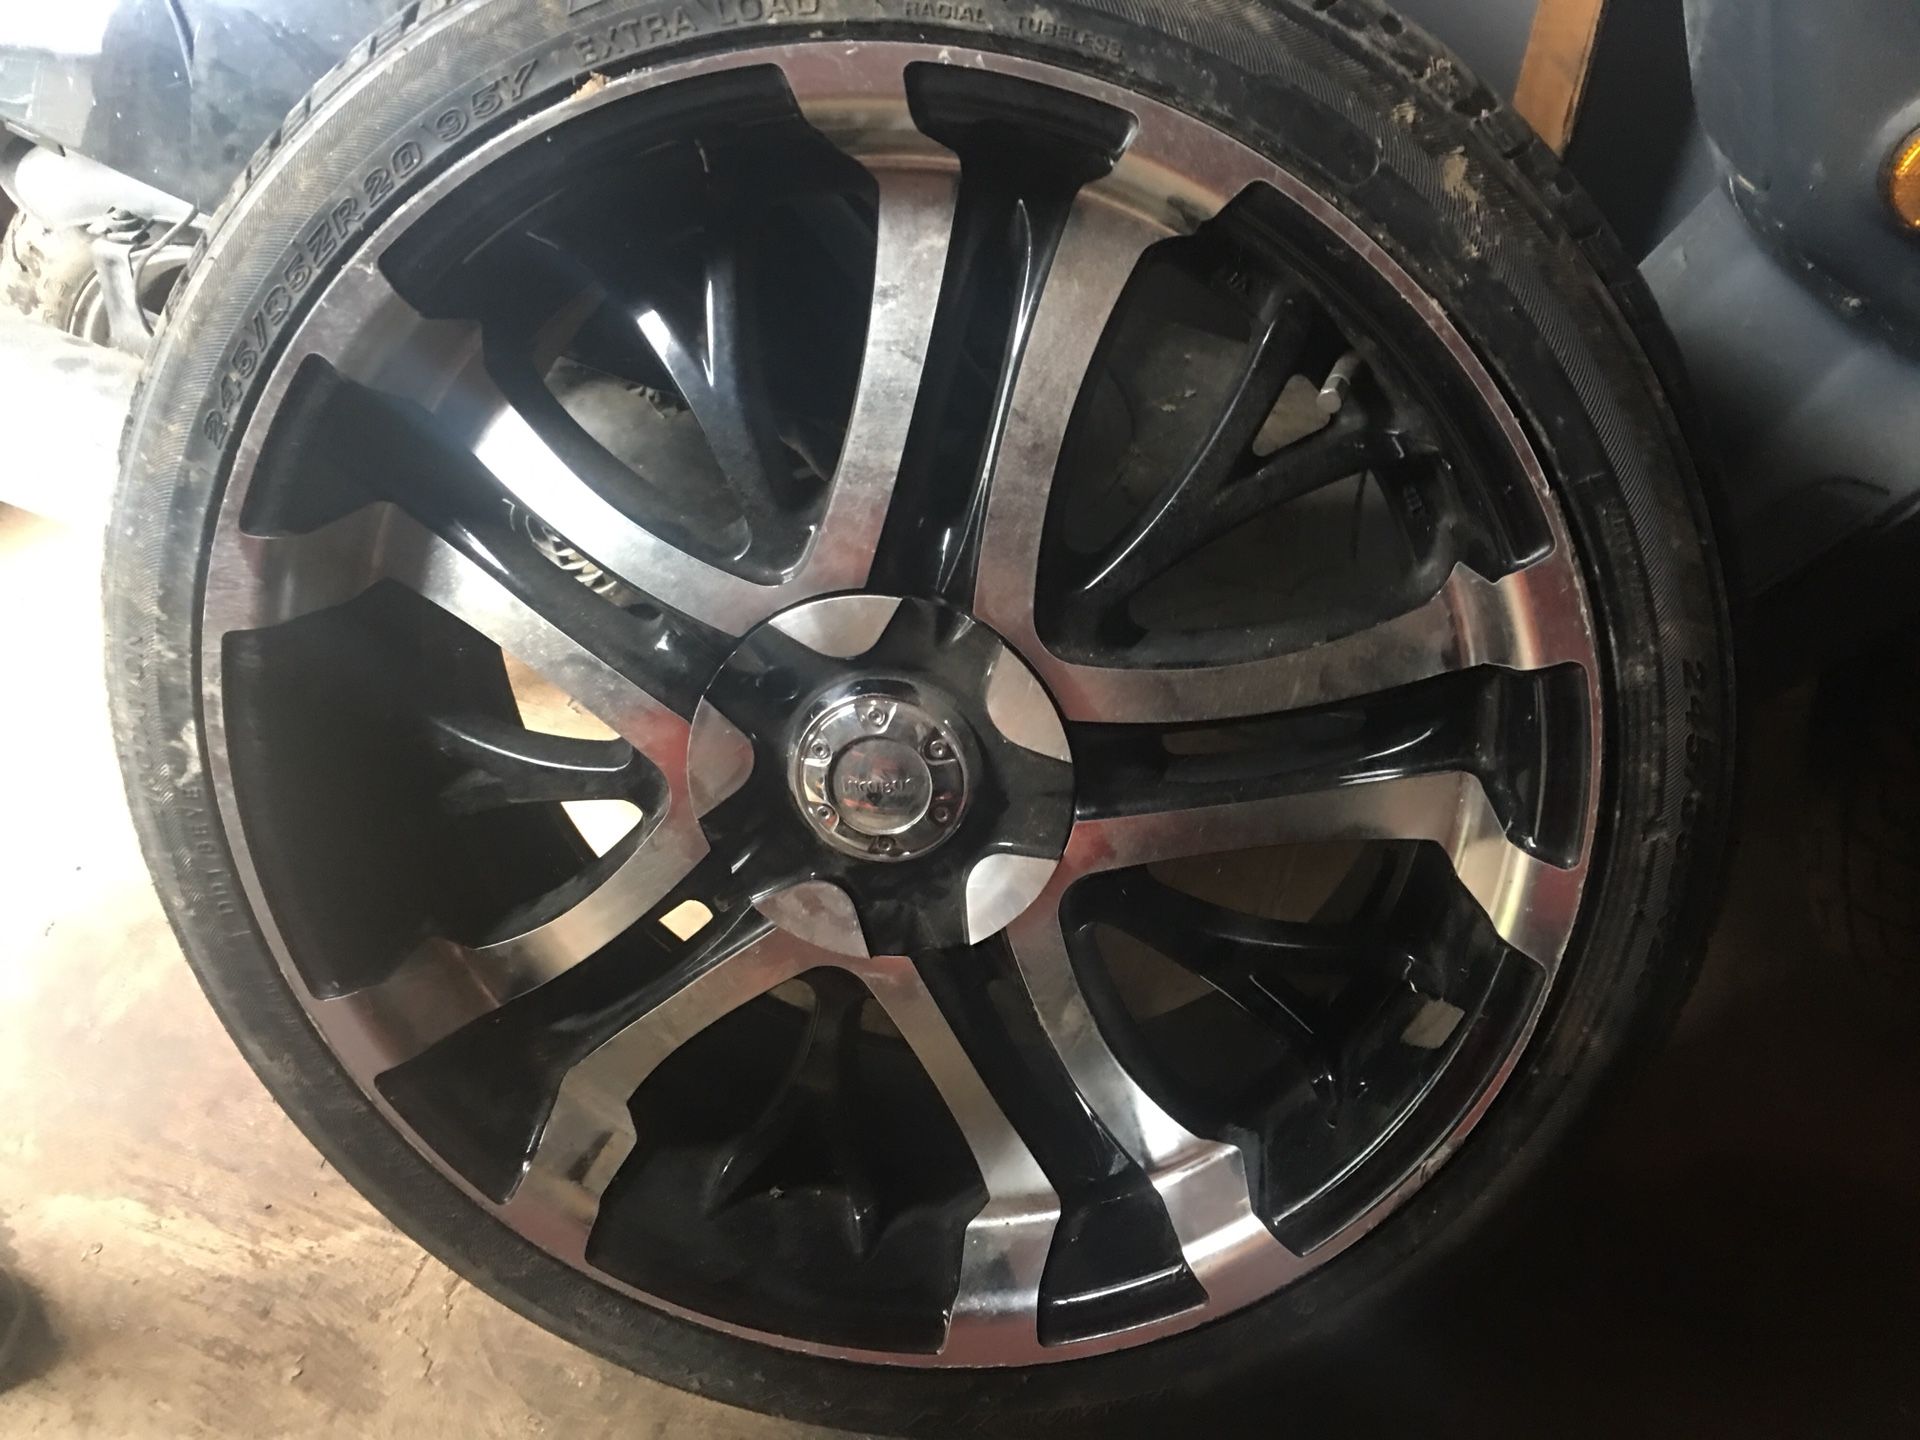 Set of 20” black and chrome rims w/ tires